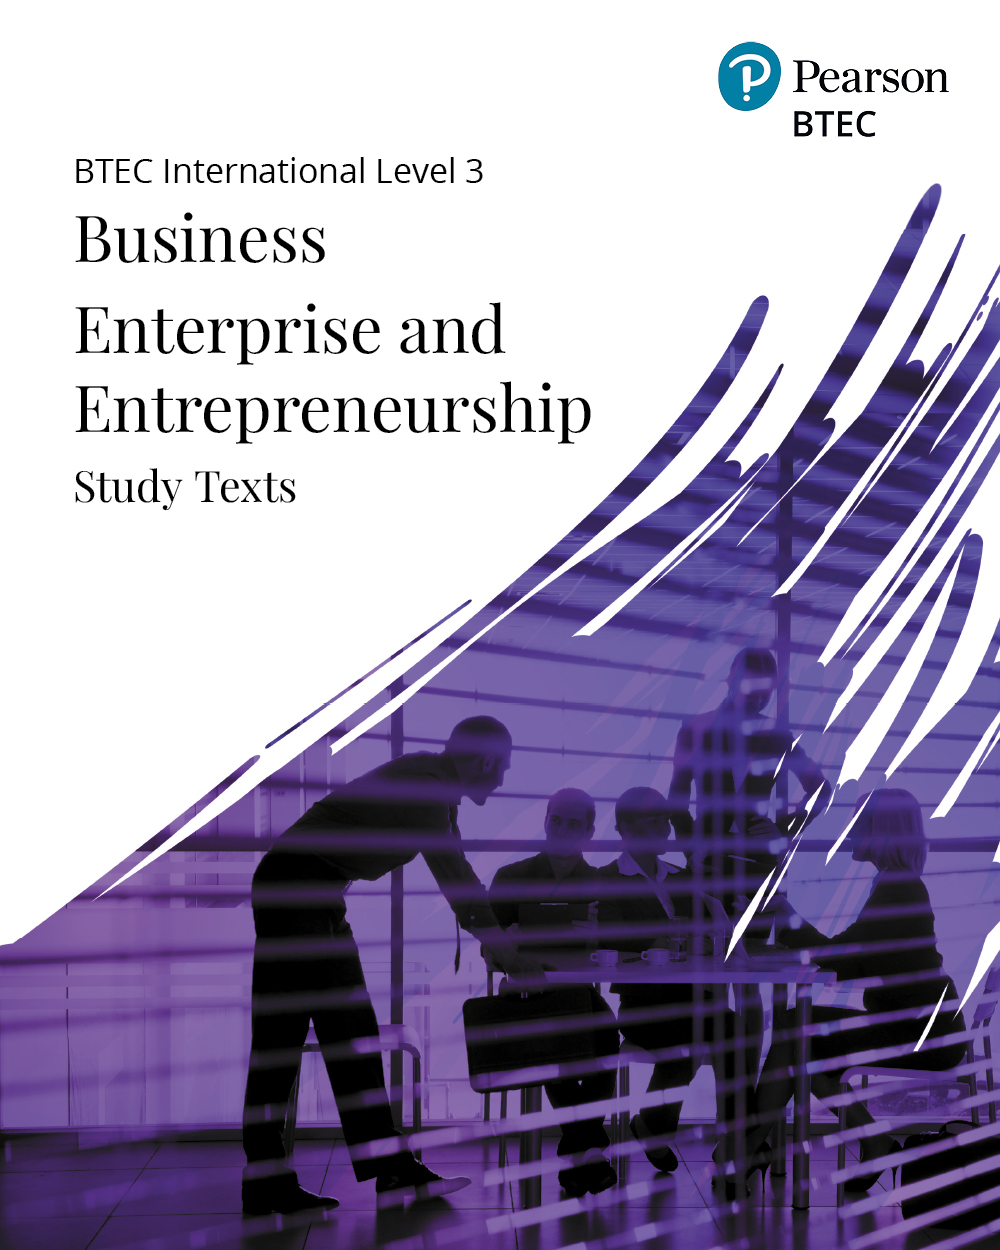 btec-international-level-3-study-texts-business